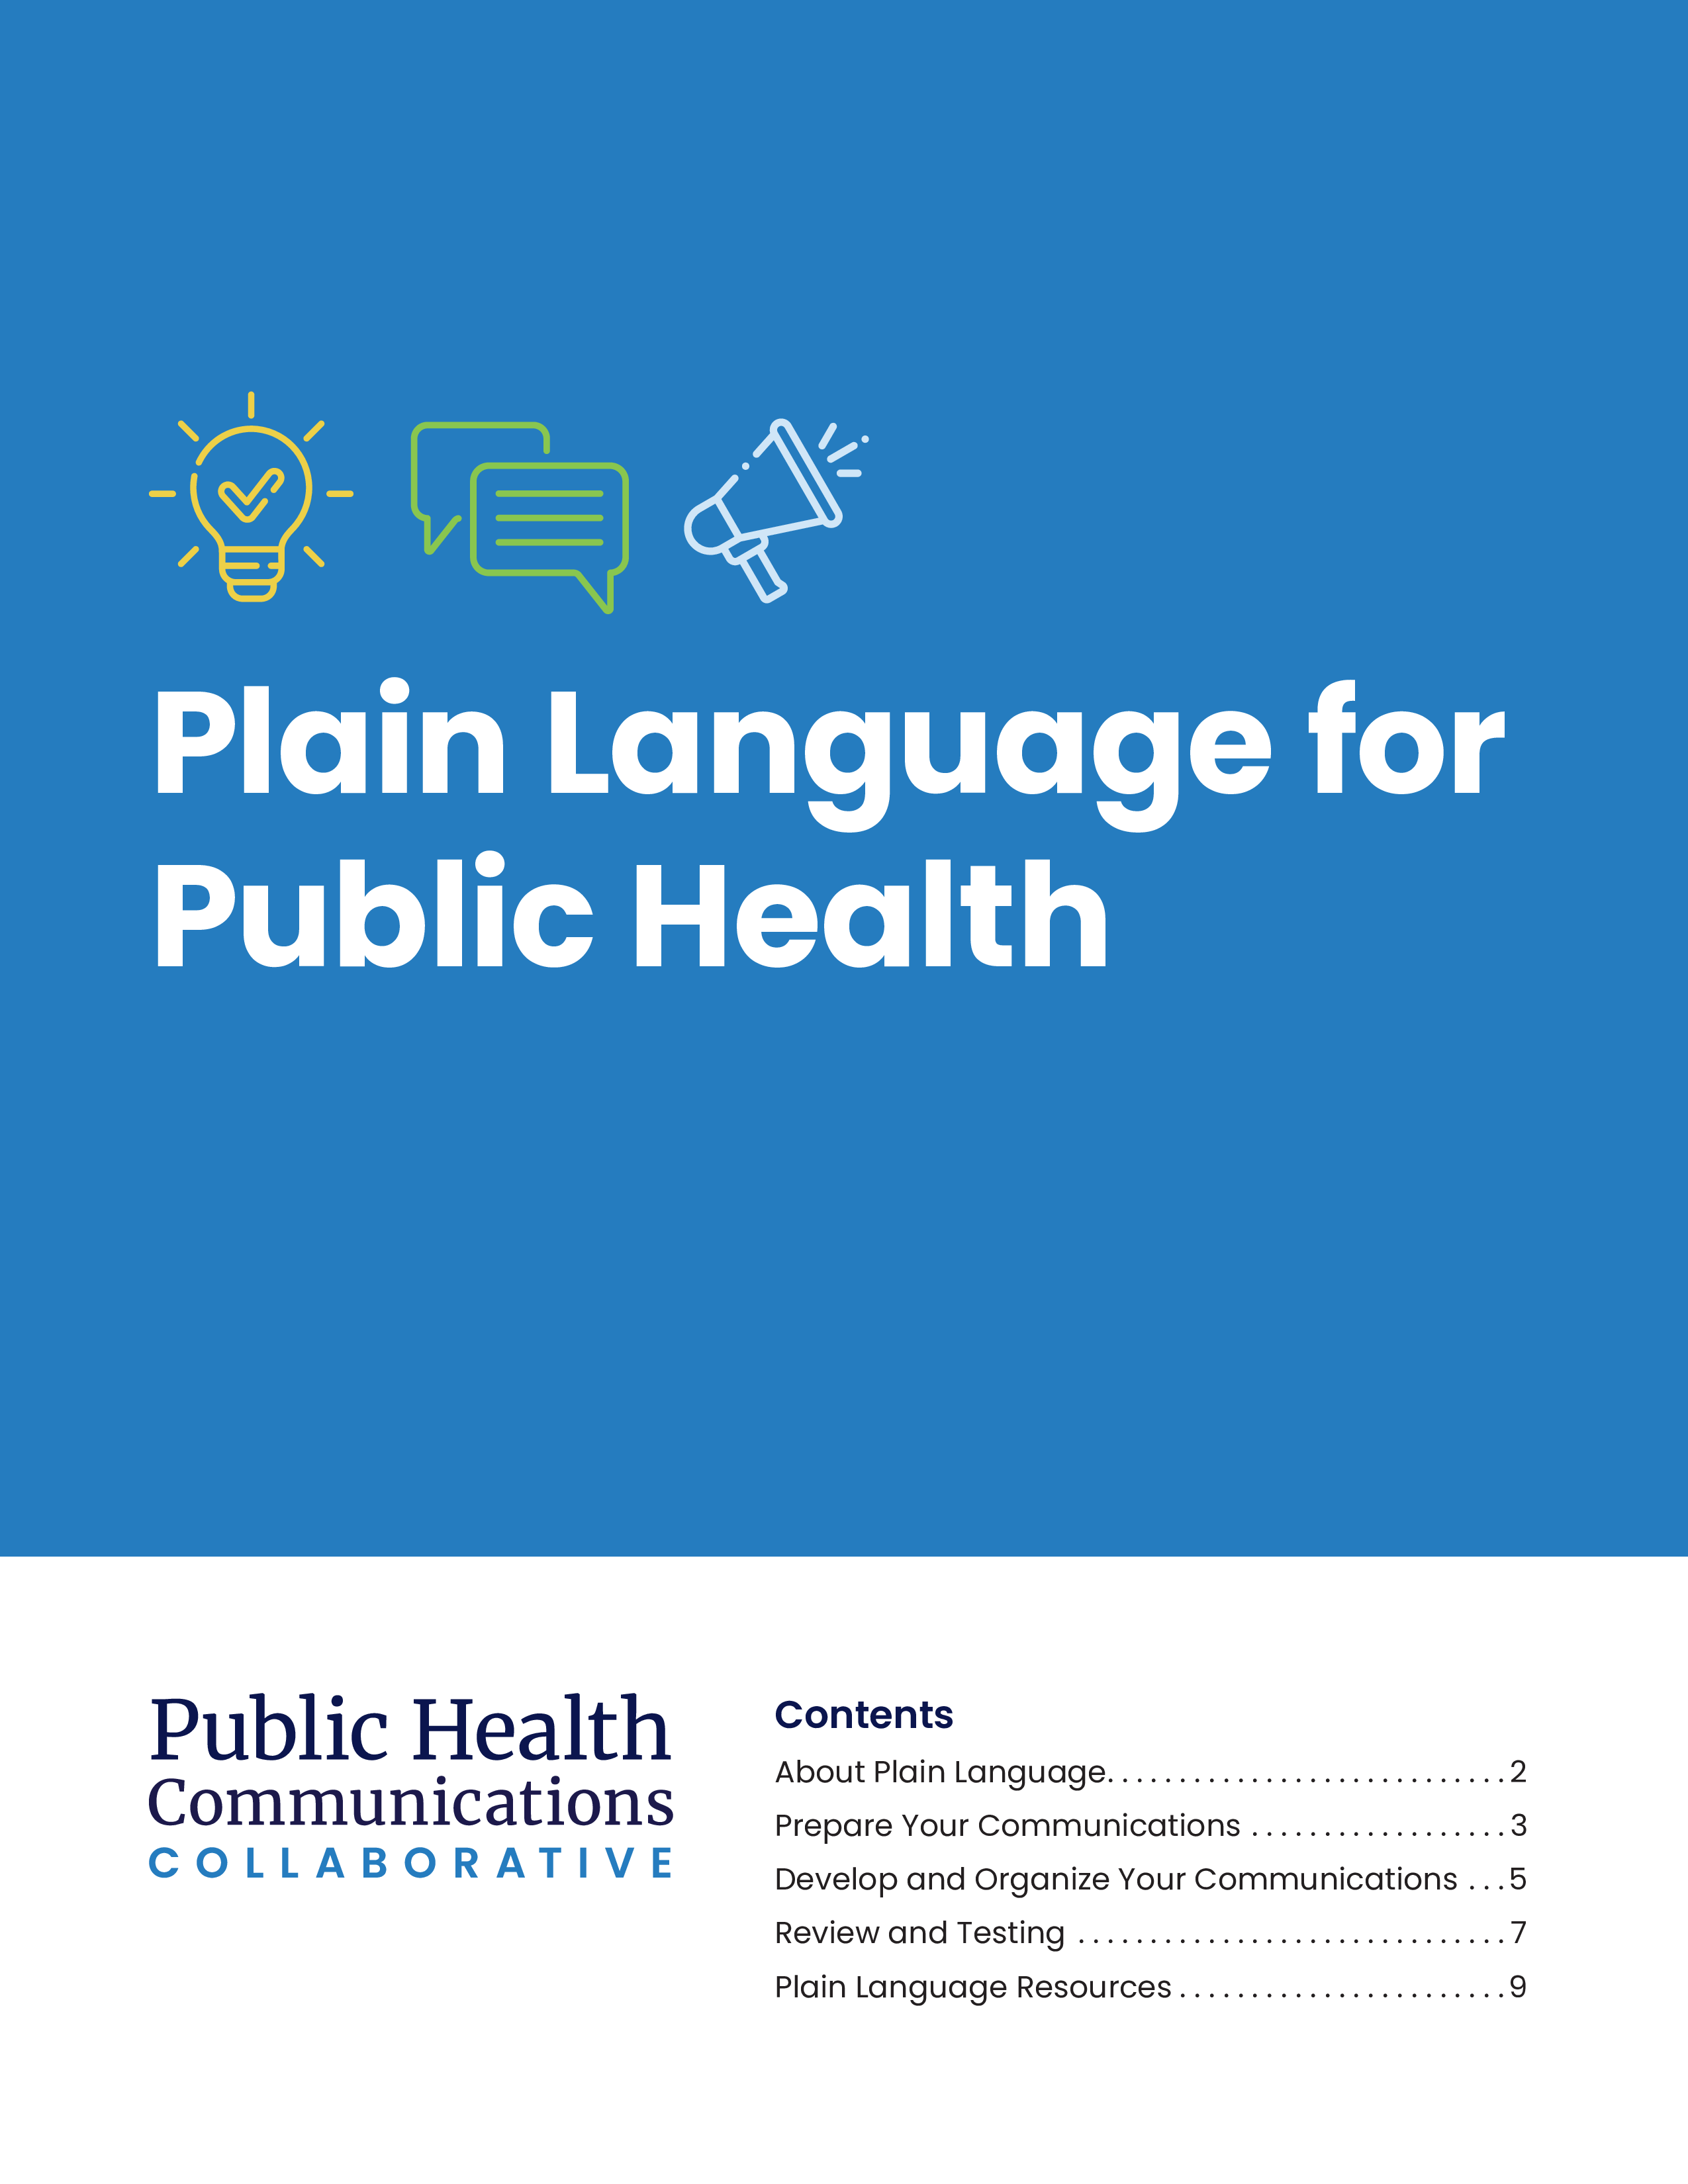 Plain language for public health report cover page